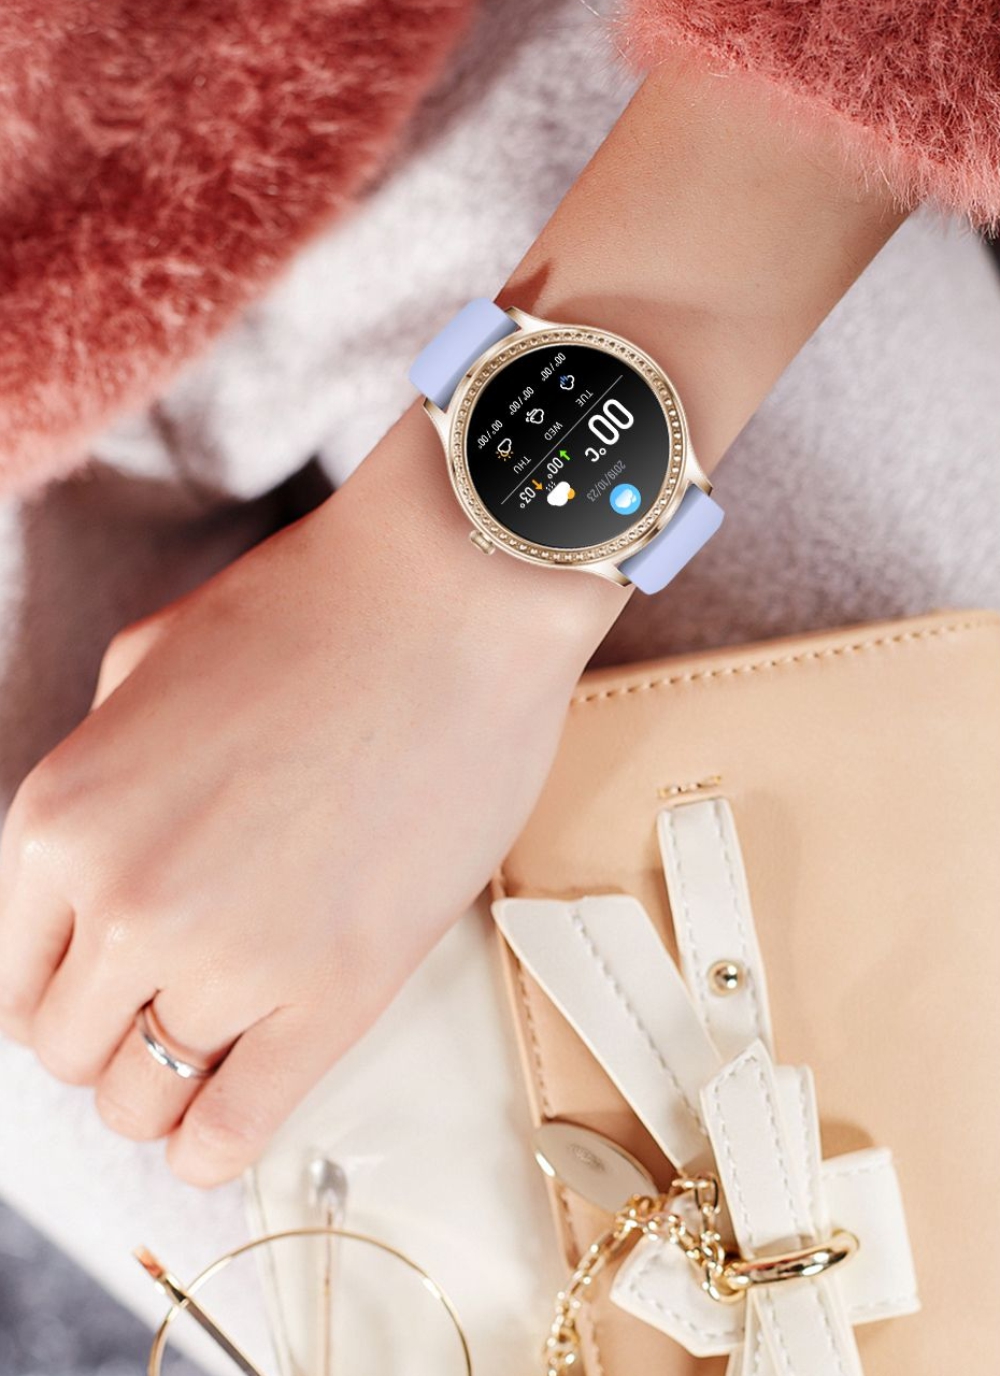 Ceas Smartwatch Dama Twinkler TKY-AK35 cu Display 1.32 inch, Functii sanatate, Notificari, Moduri sport, Violet